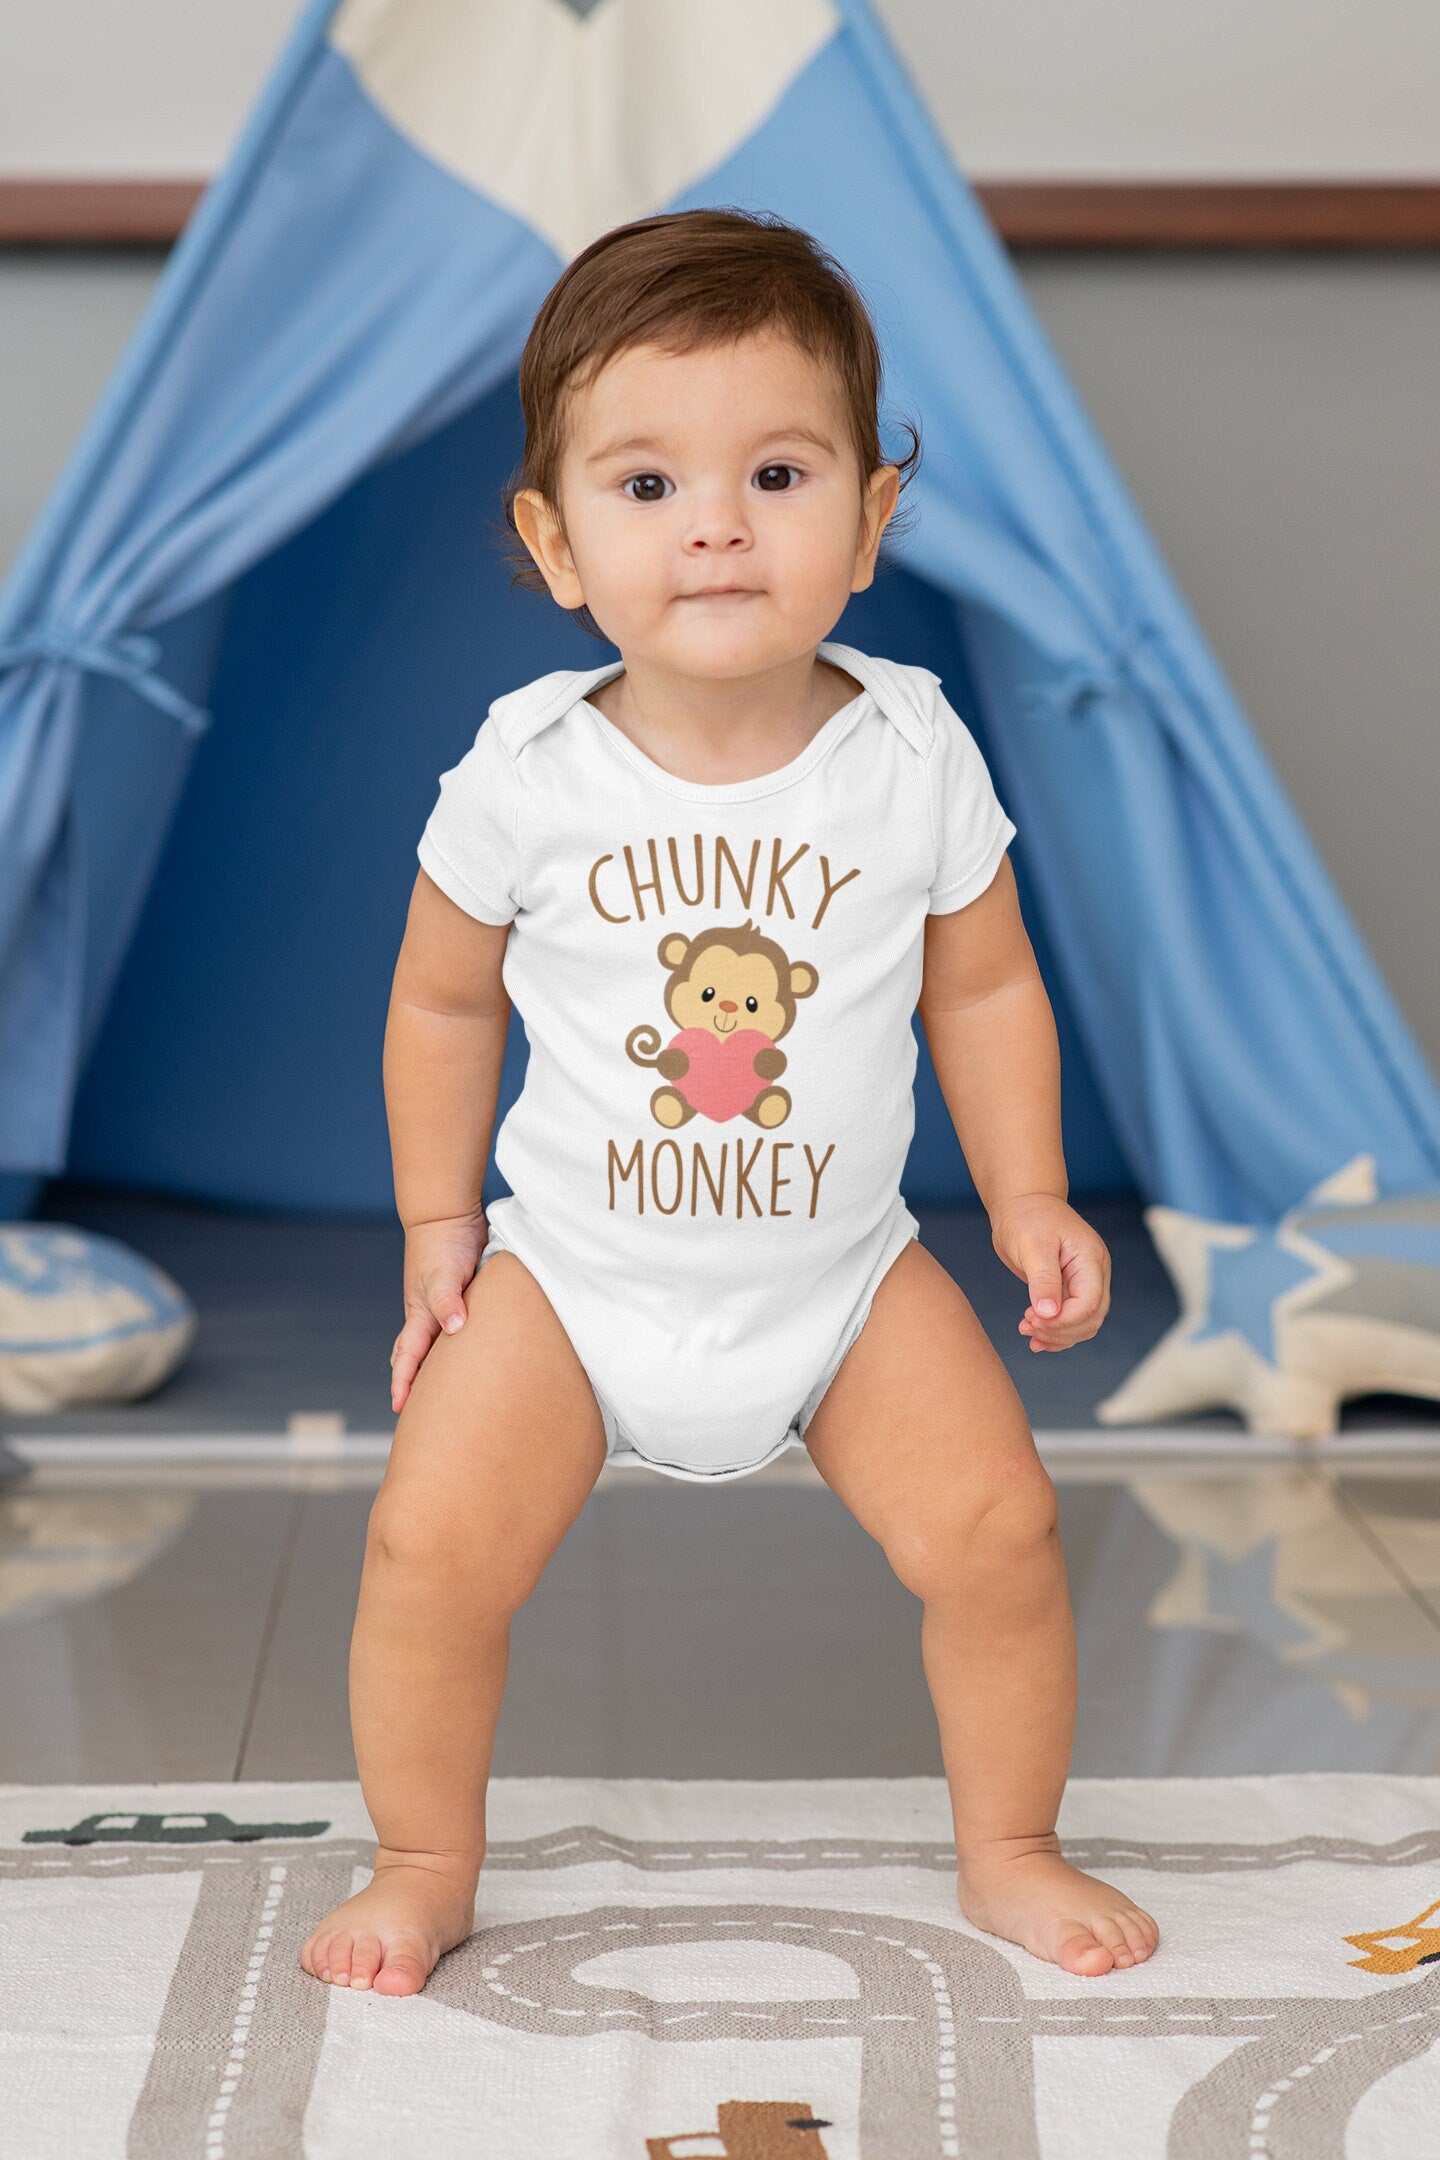 Chunky Monkey Baby Vest, Baby Grow, Cute Baby Grow